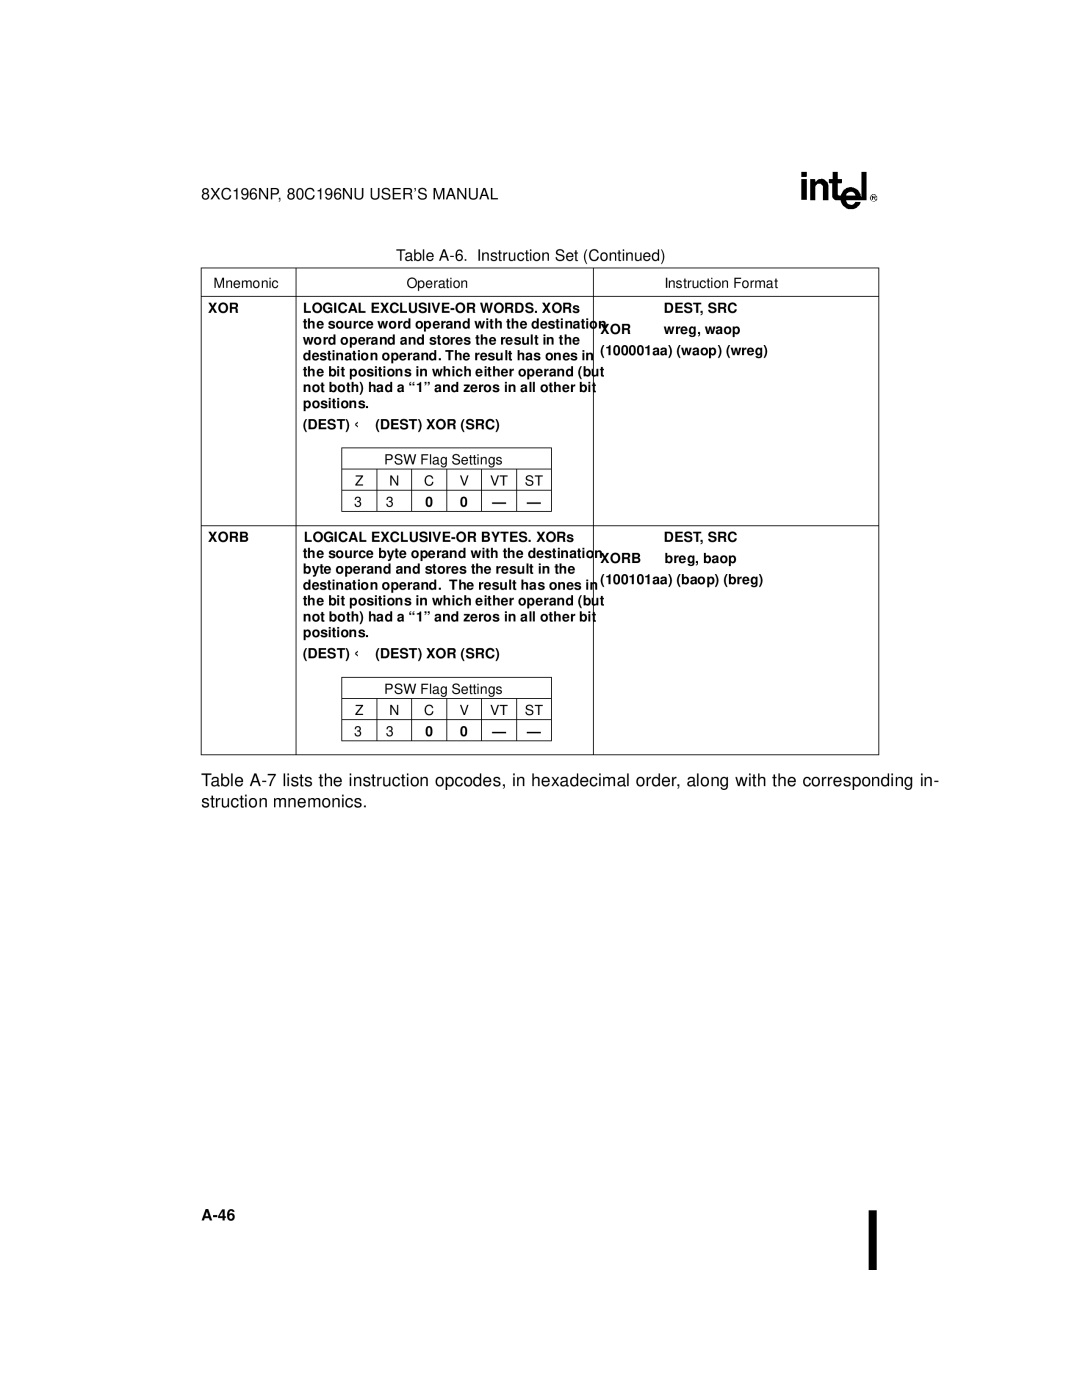 Intel 80C196NU, 8XC196NP, Microcontroller manual Xor, Dest ← Dest XOR SRC 